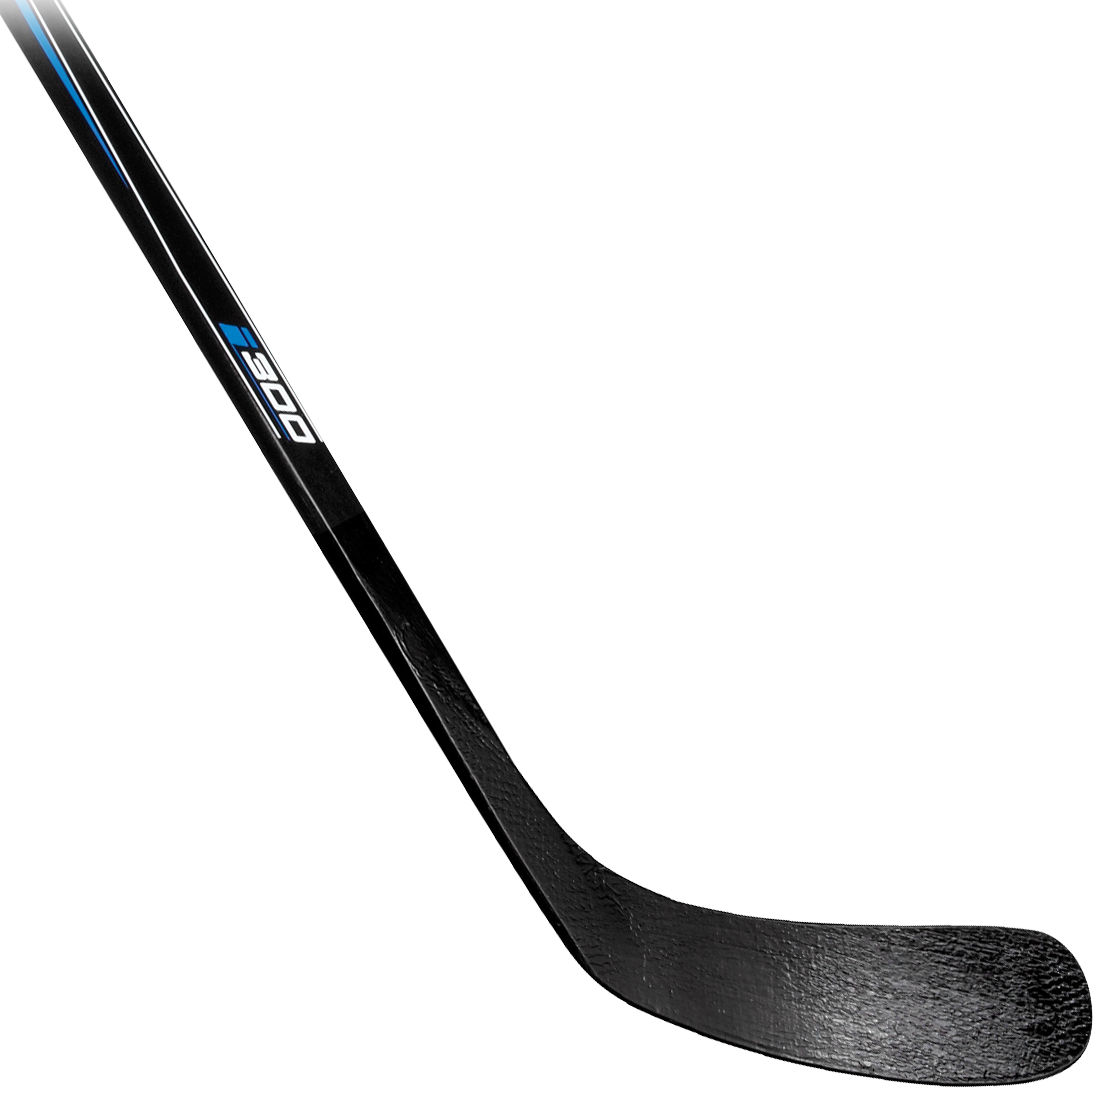 ice hockey stick clipart